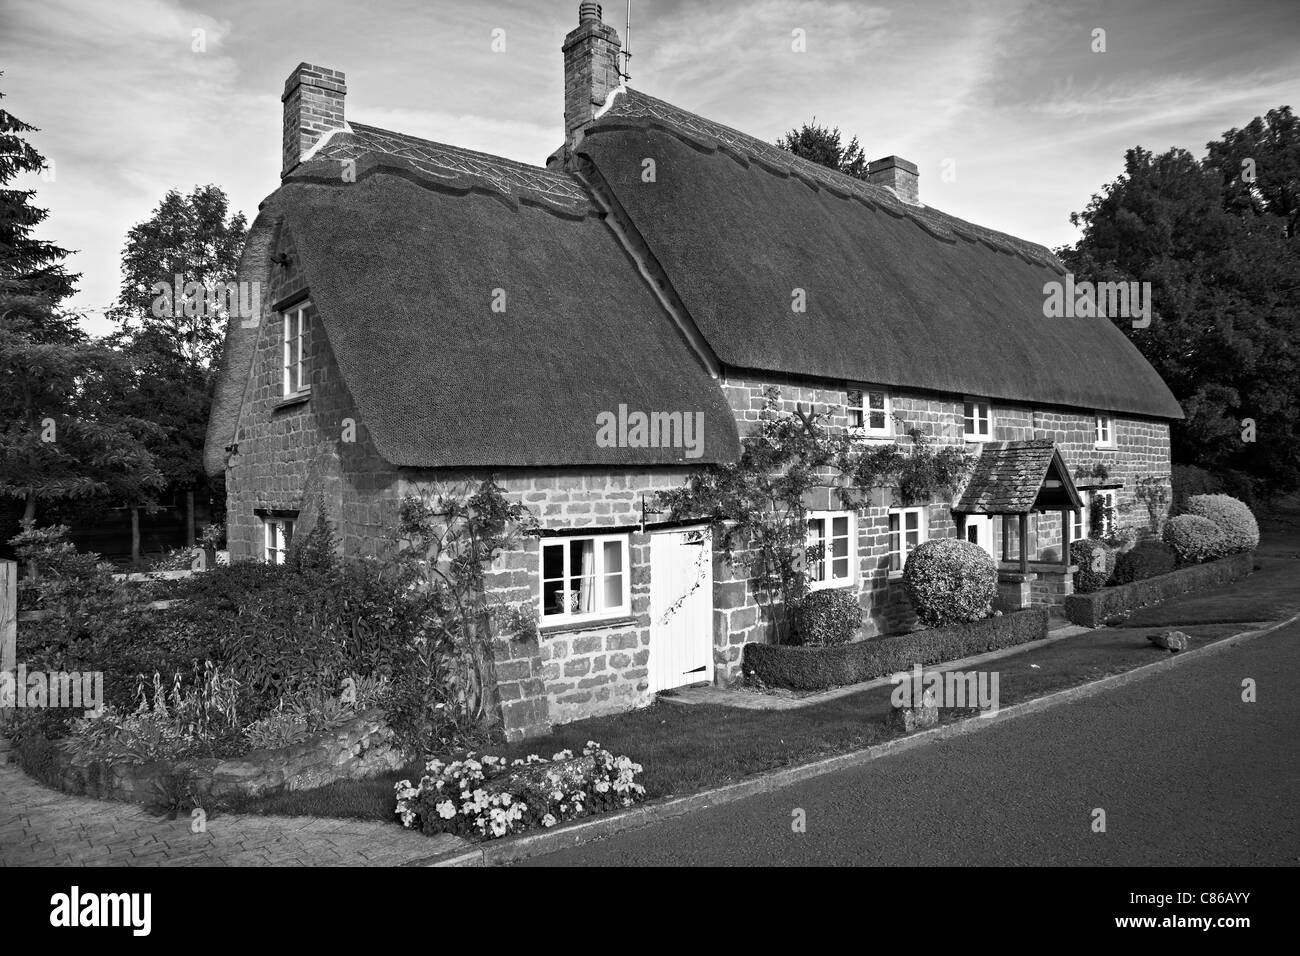 Cottage con tetto in paglia UK.pittoresco cottage tradizionale con tetto in paglia esterno in un ambiente rurale inglese. Wroxton St Mary Banbury Oxfordshire Inghilterra Foto Stock